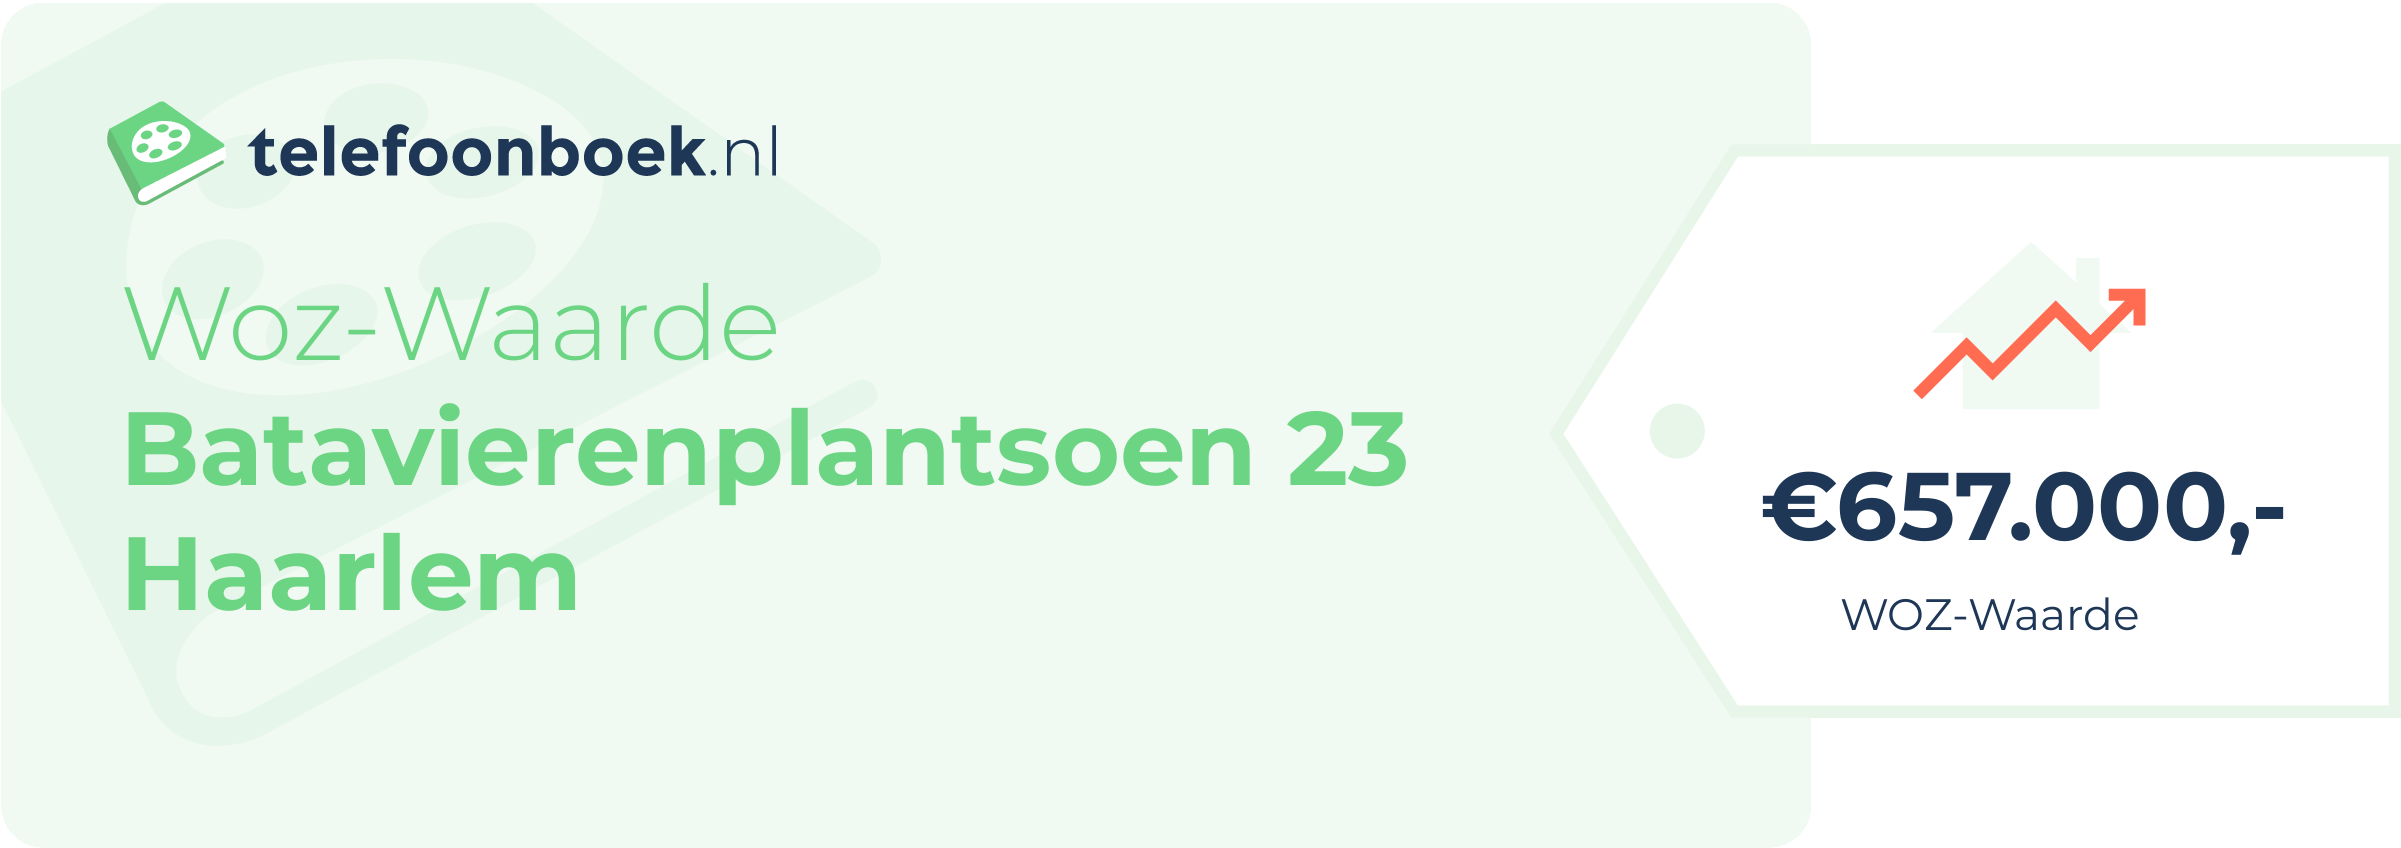 WOZ-waarde Batavierenplantsoen 23 Haarlem